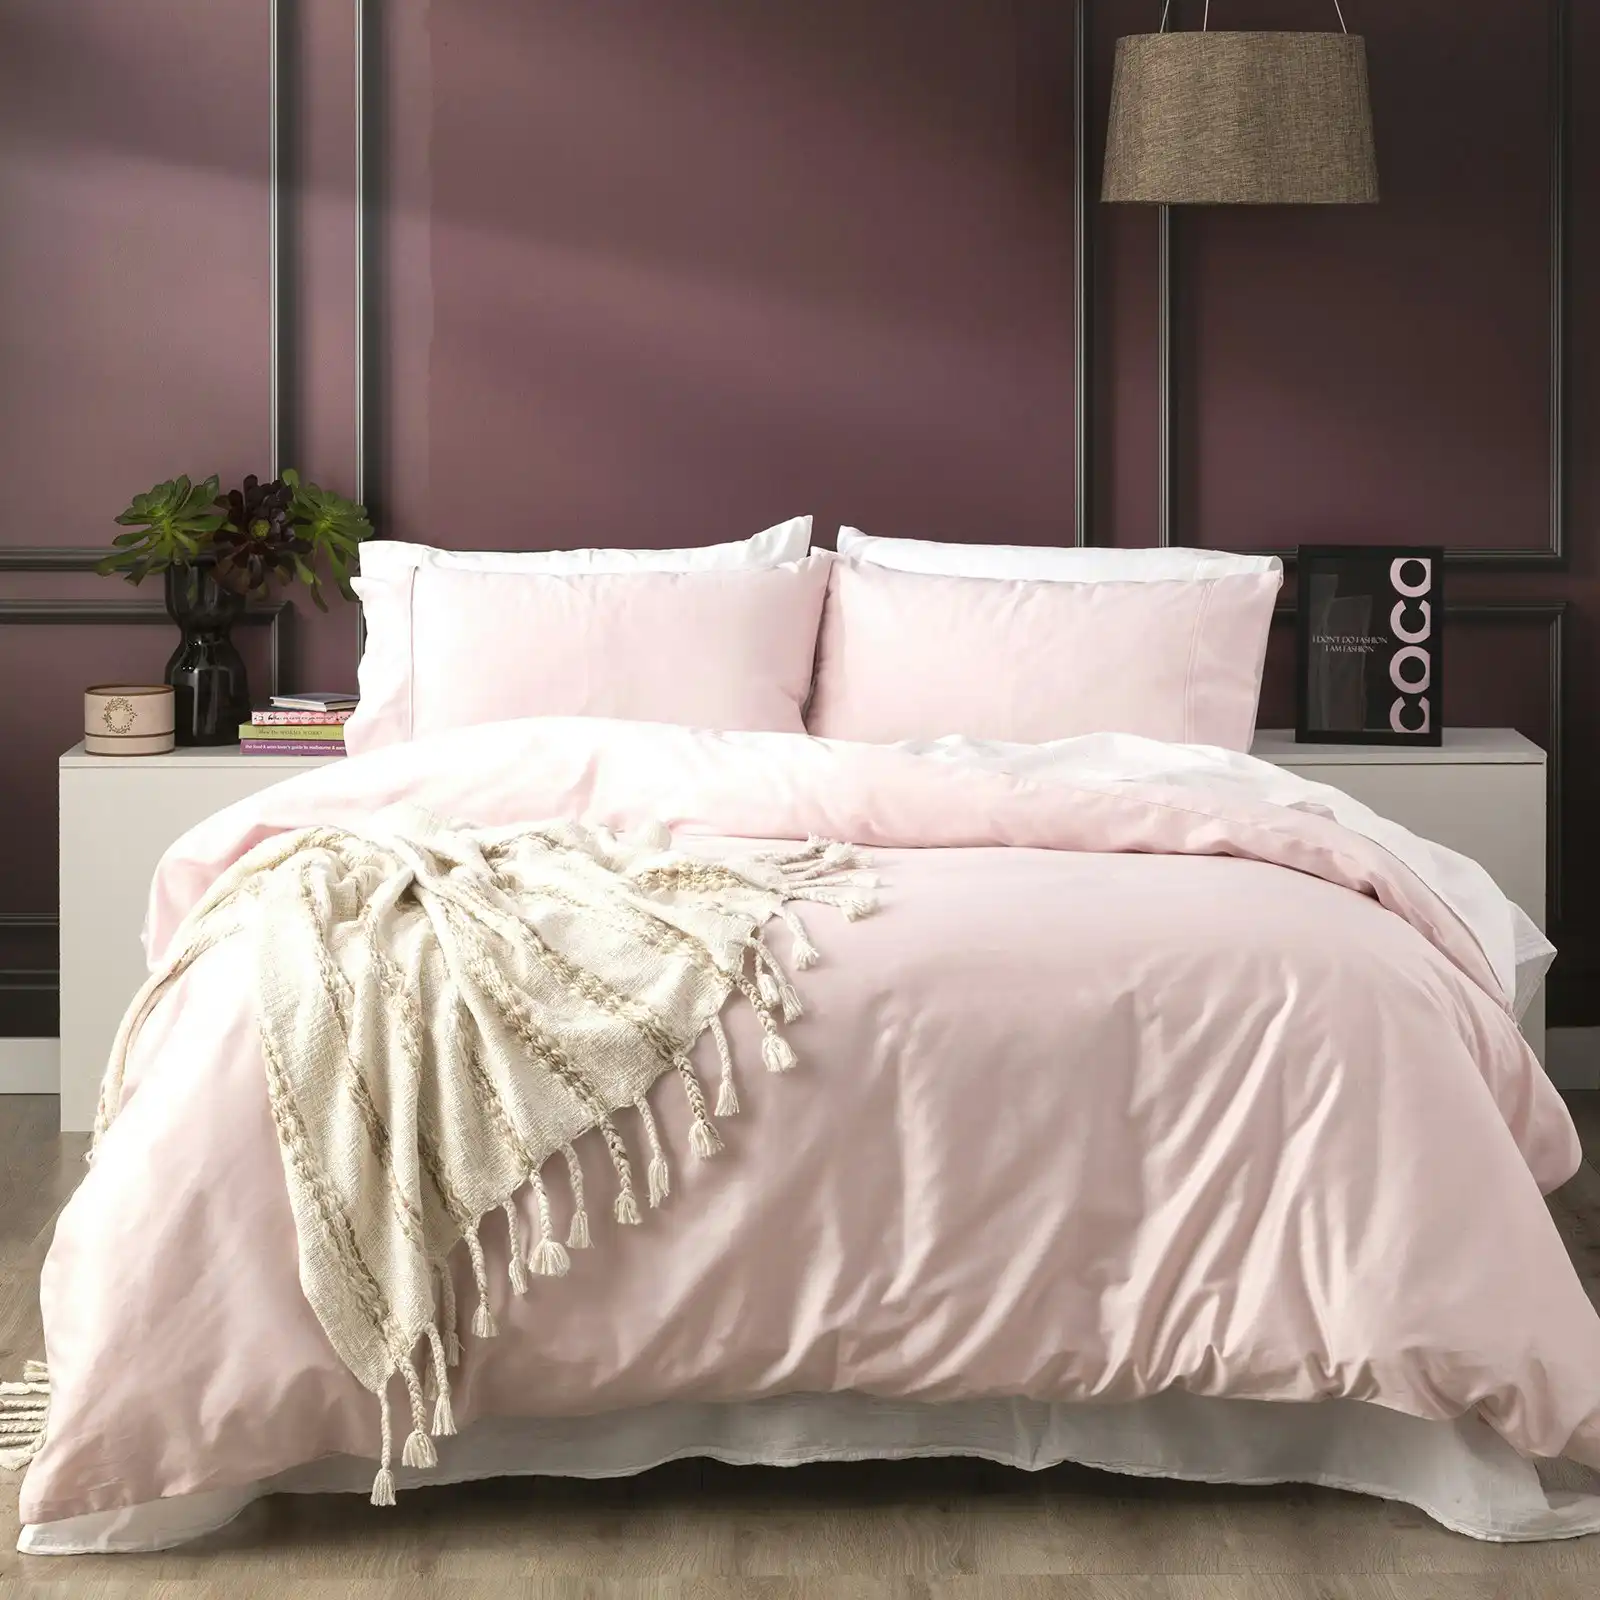 Park Avenue 500TC Super King Bed Quilt Cover Set Natural Bamboo Cotton Peach